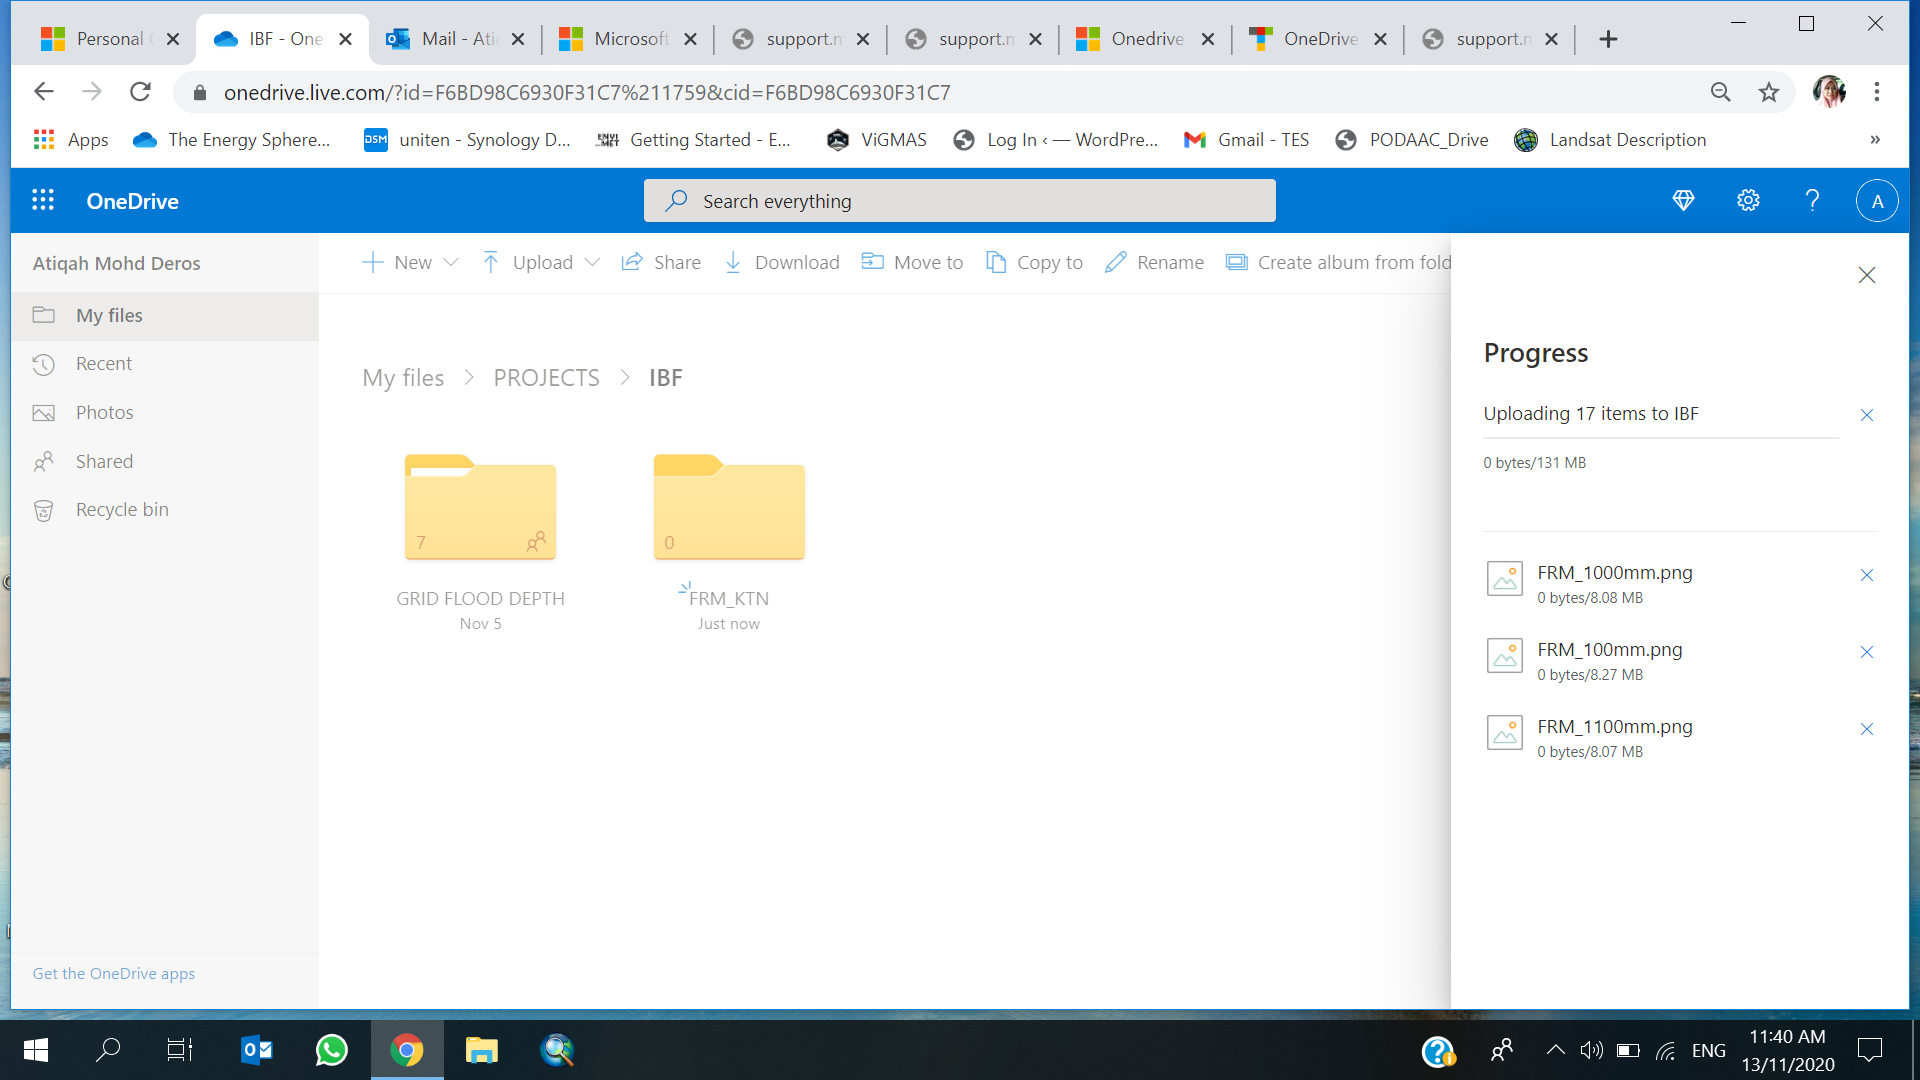 File and Folder upload not progressing 85ad7479-adf9-472c-b30e-60a0c4c9c2a1?upload=true.png